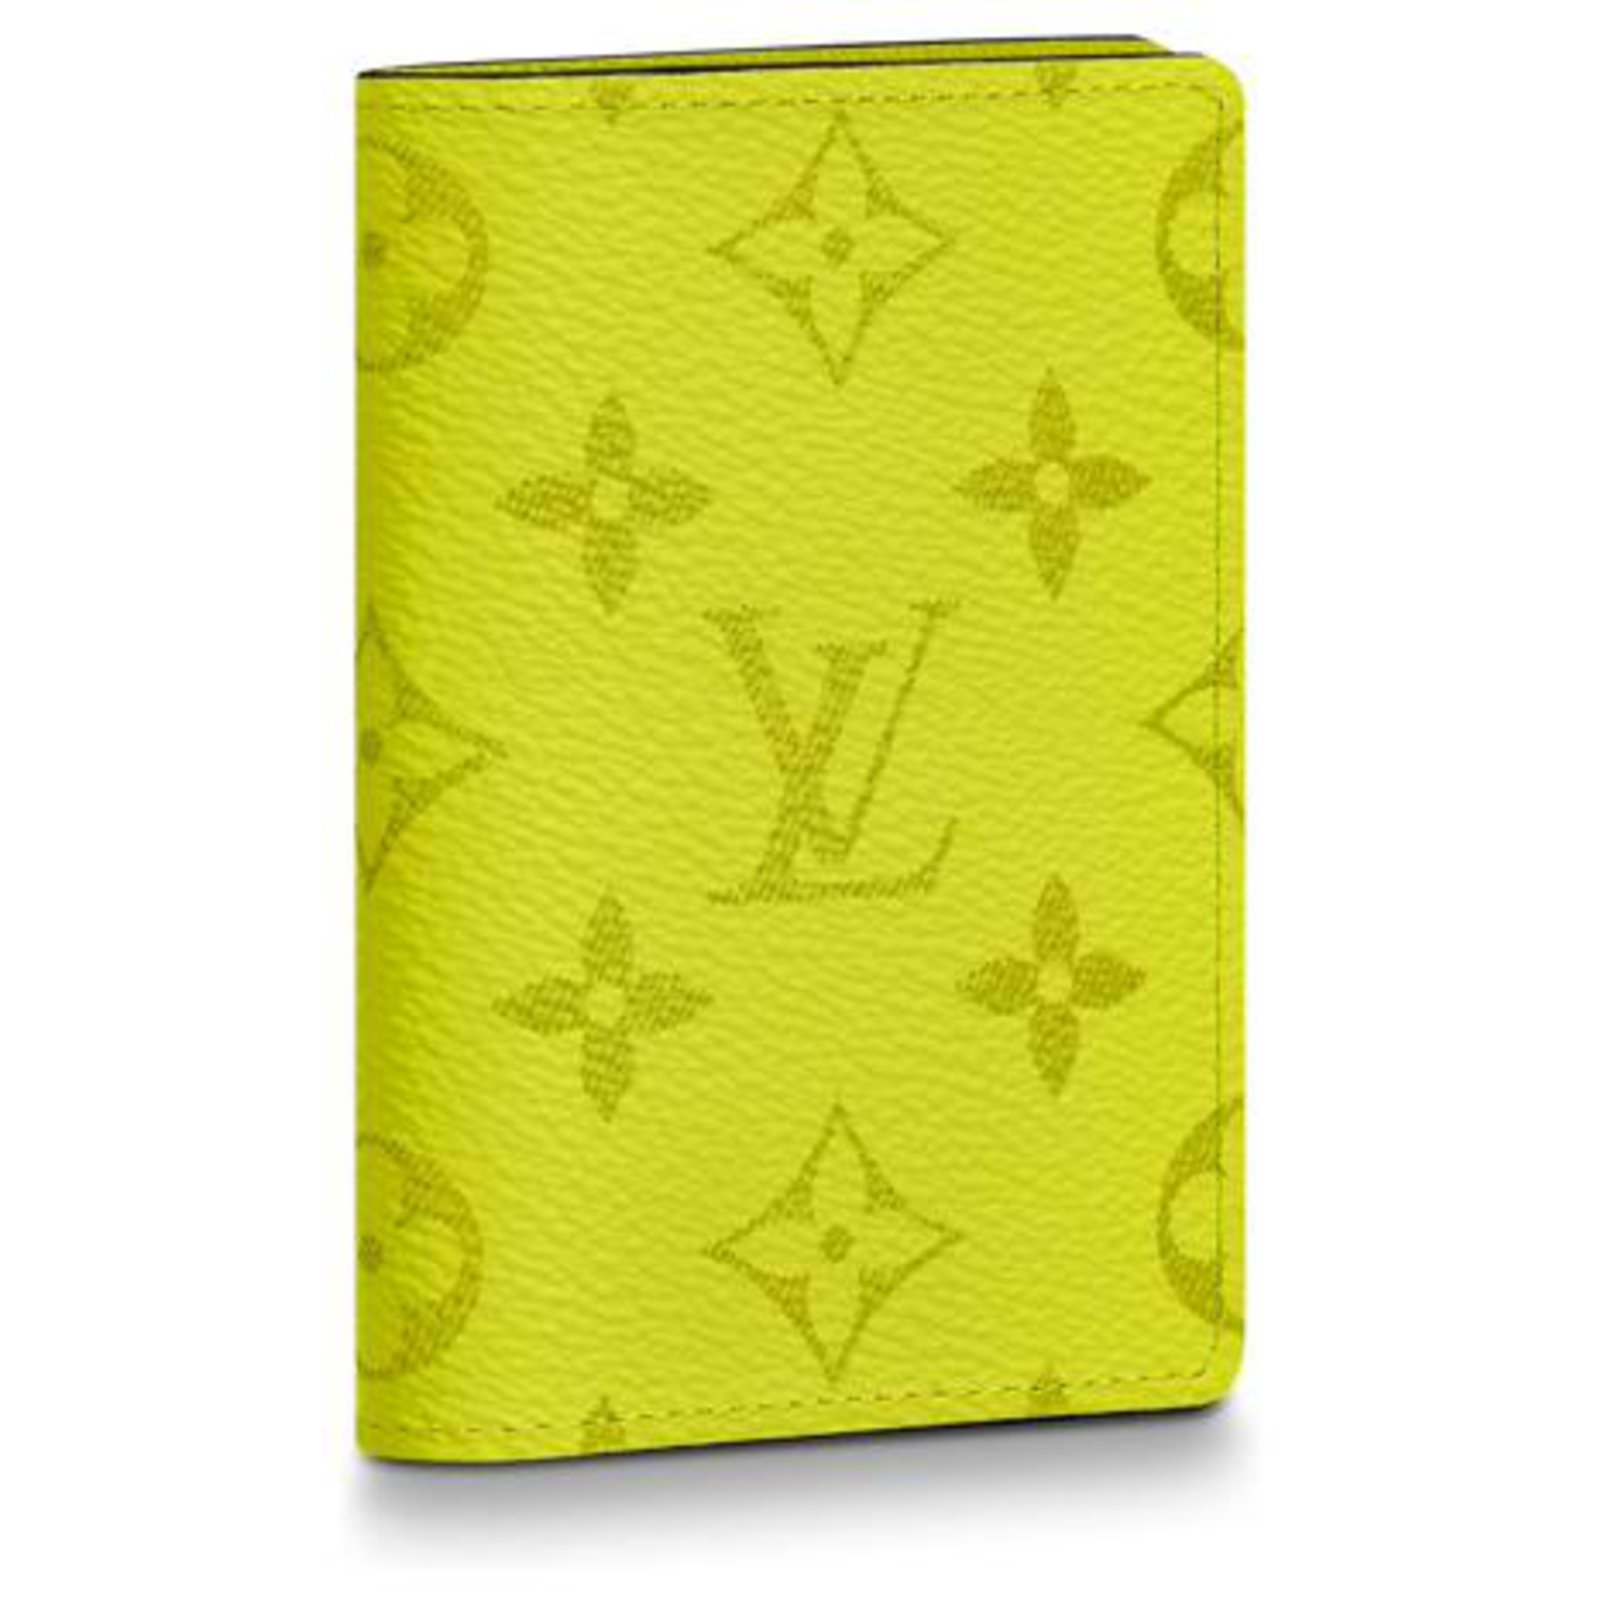 lv wallet yellow